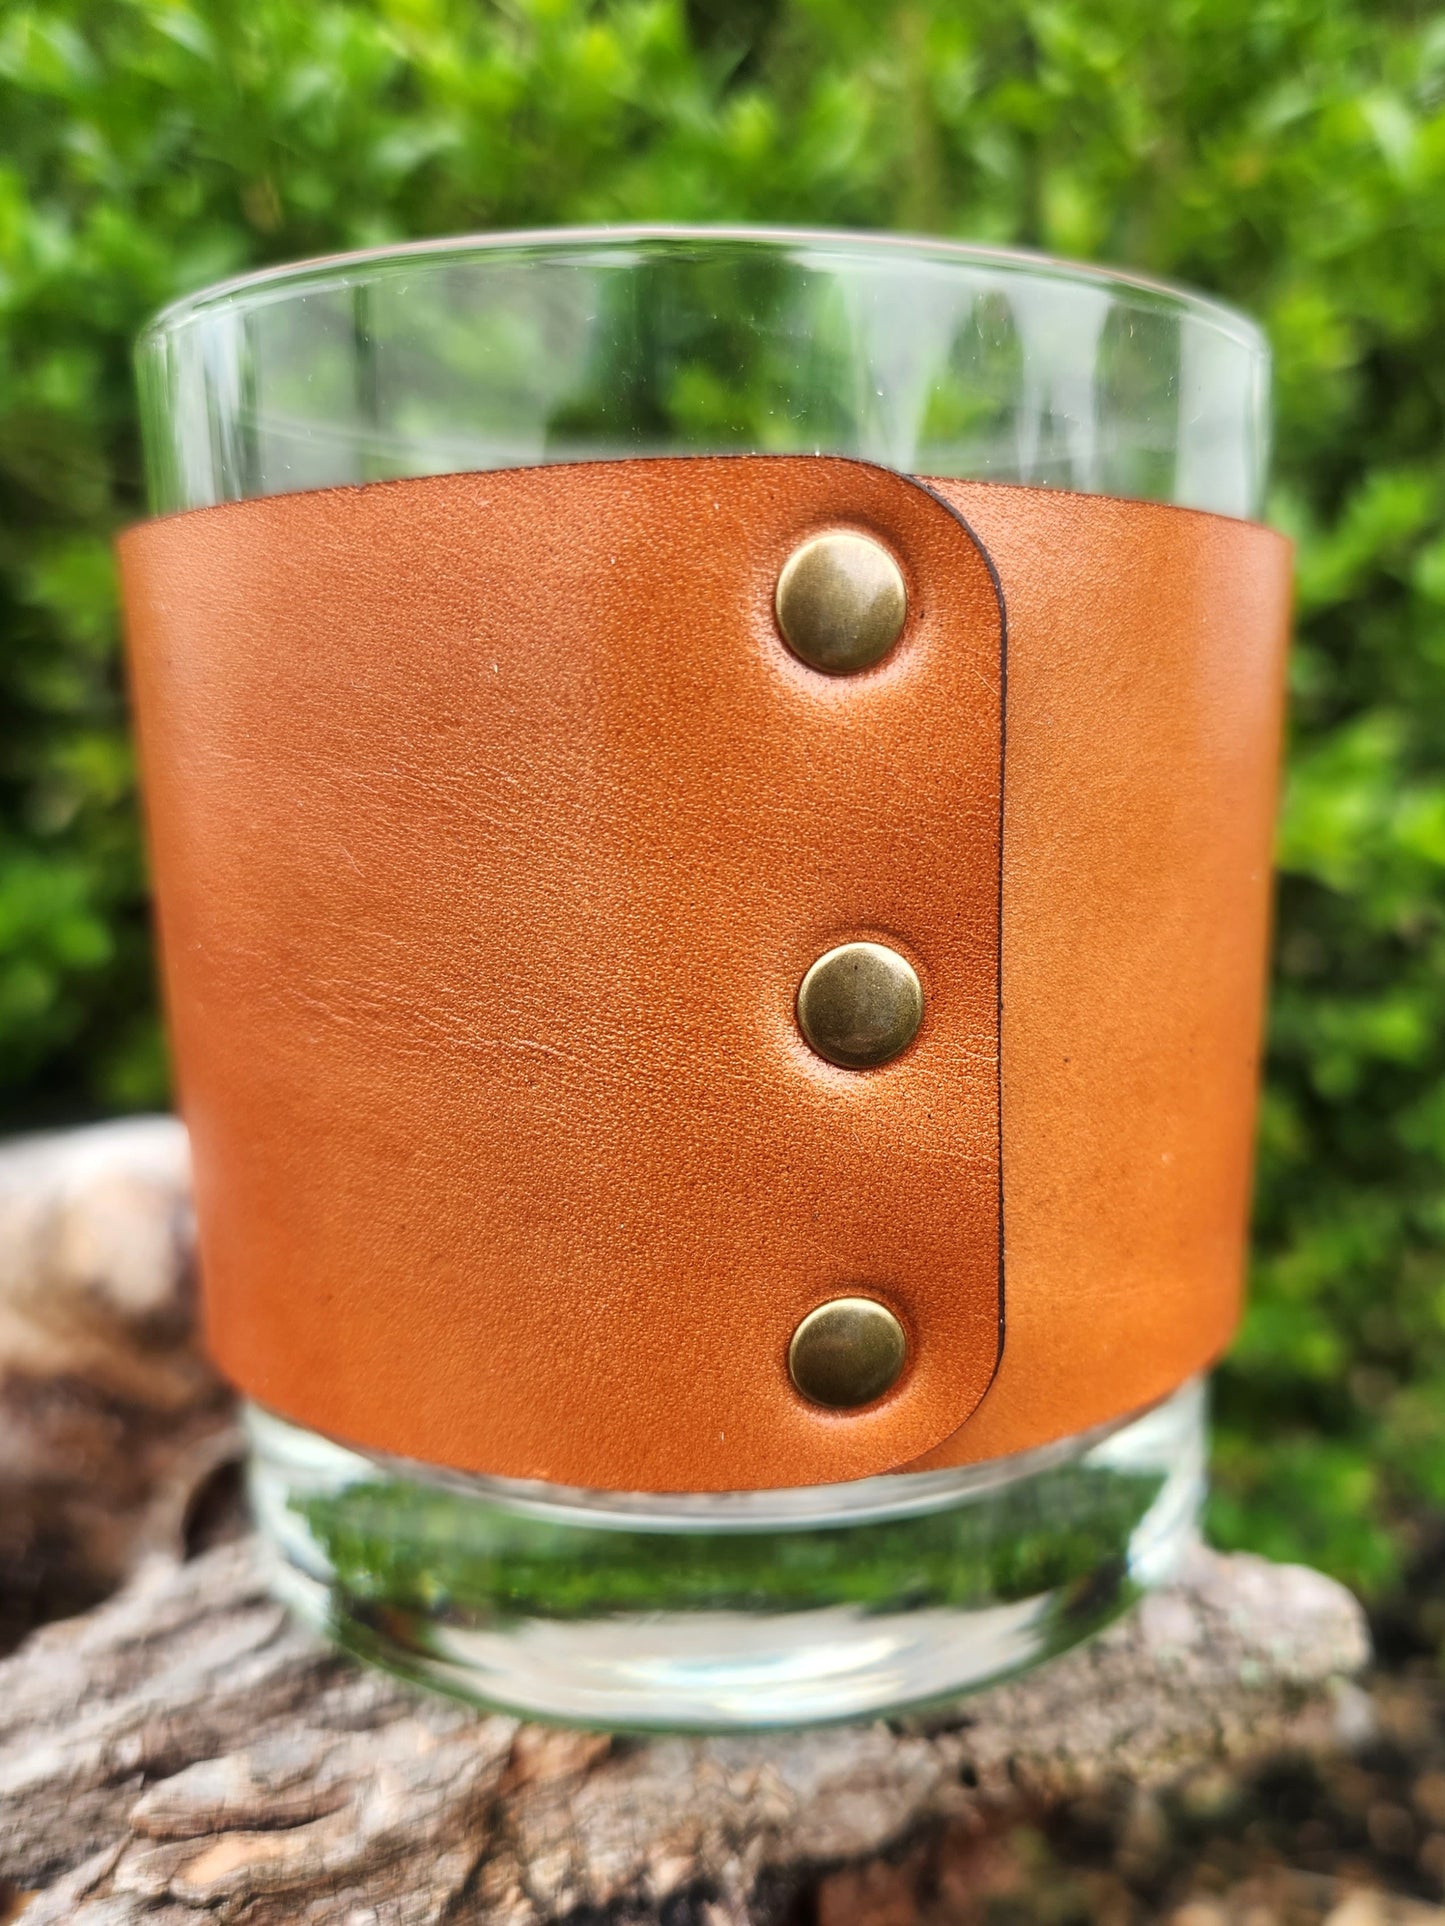 Moose Whiskey glass leather wrap - Cabin theme barware